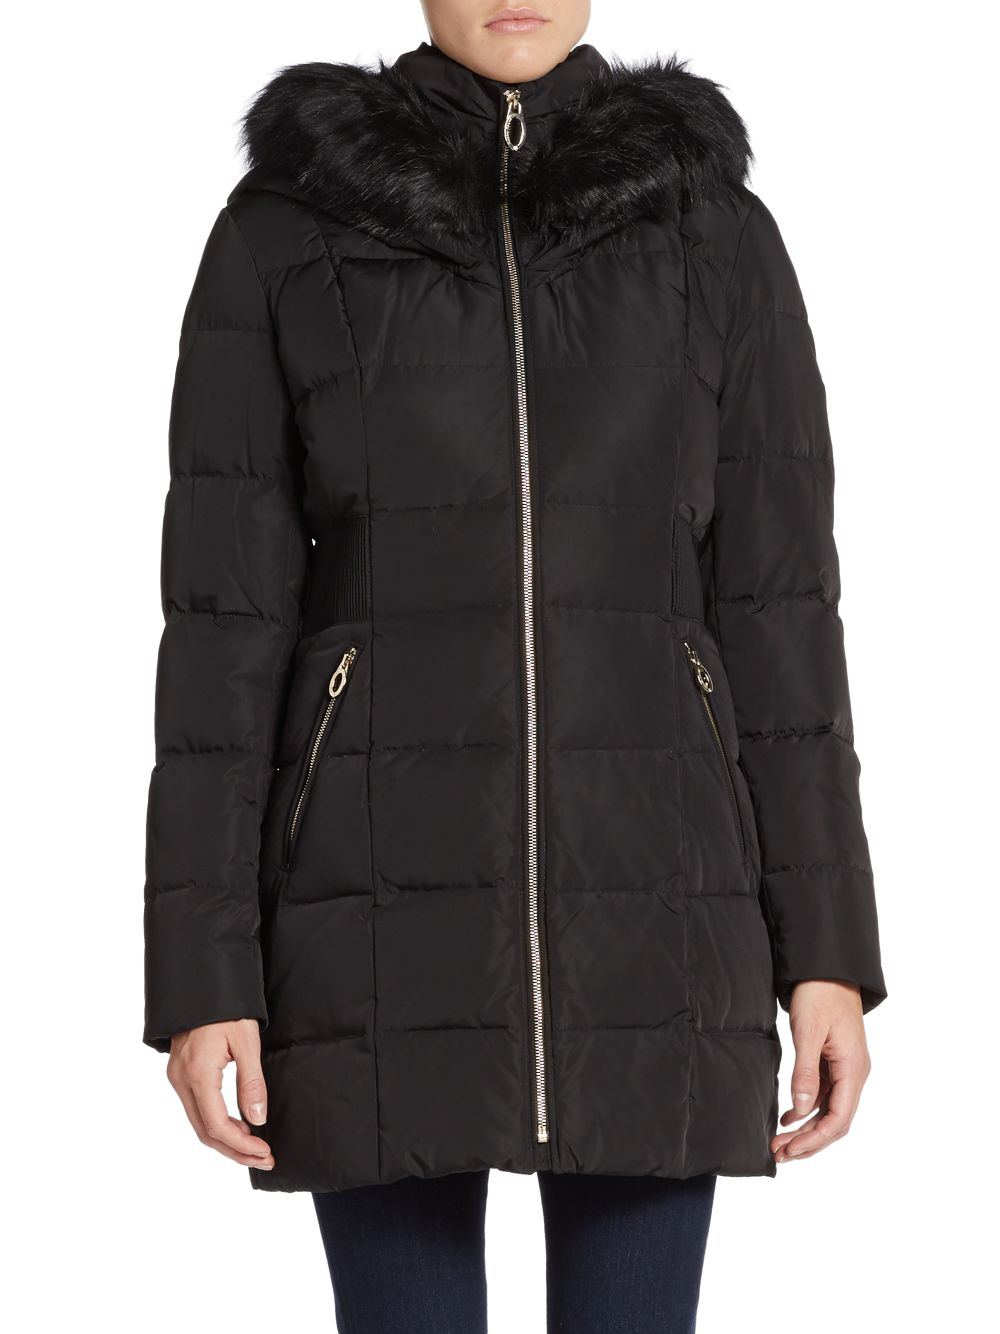 Lyst - Ivanka trump Faux Fur-trimmed Hooded Down Puffer Coat in Black